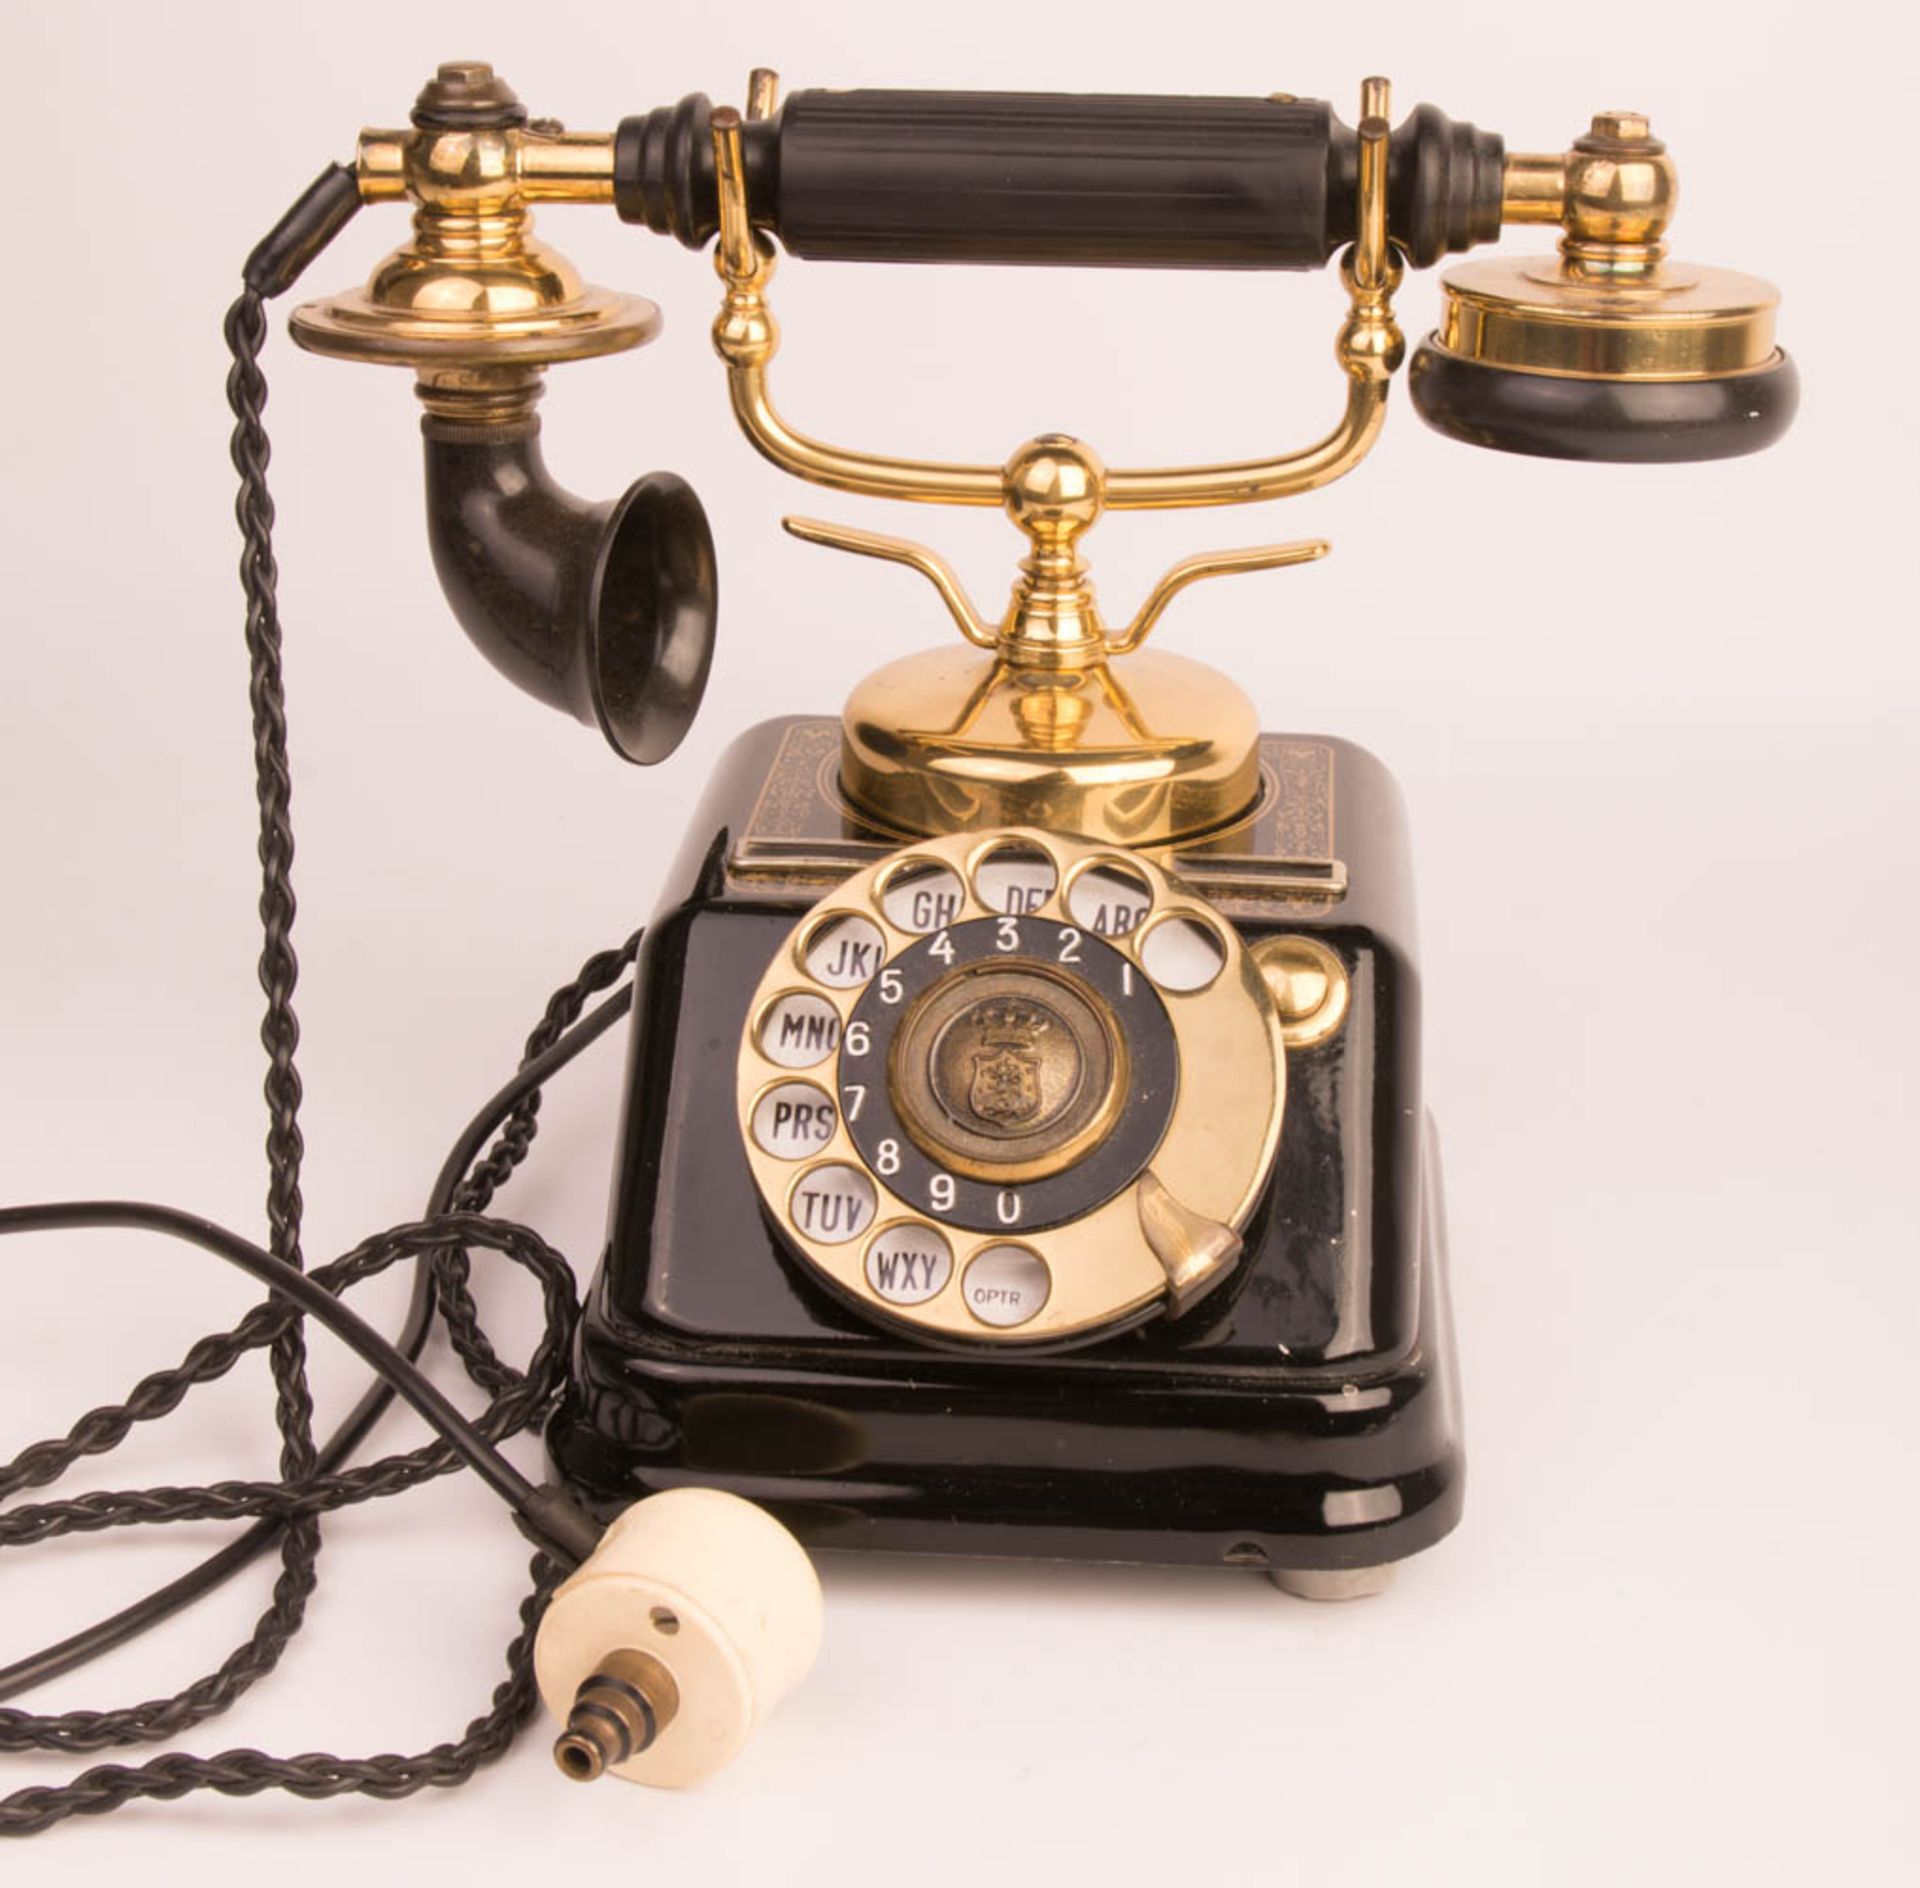 Copenhagen Expoga dial telephone in black and gold, 20th c.